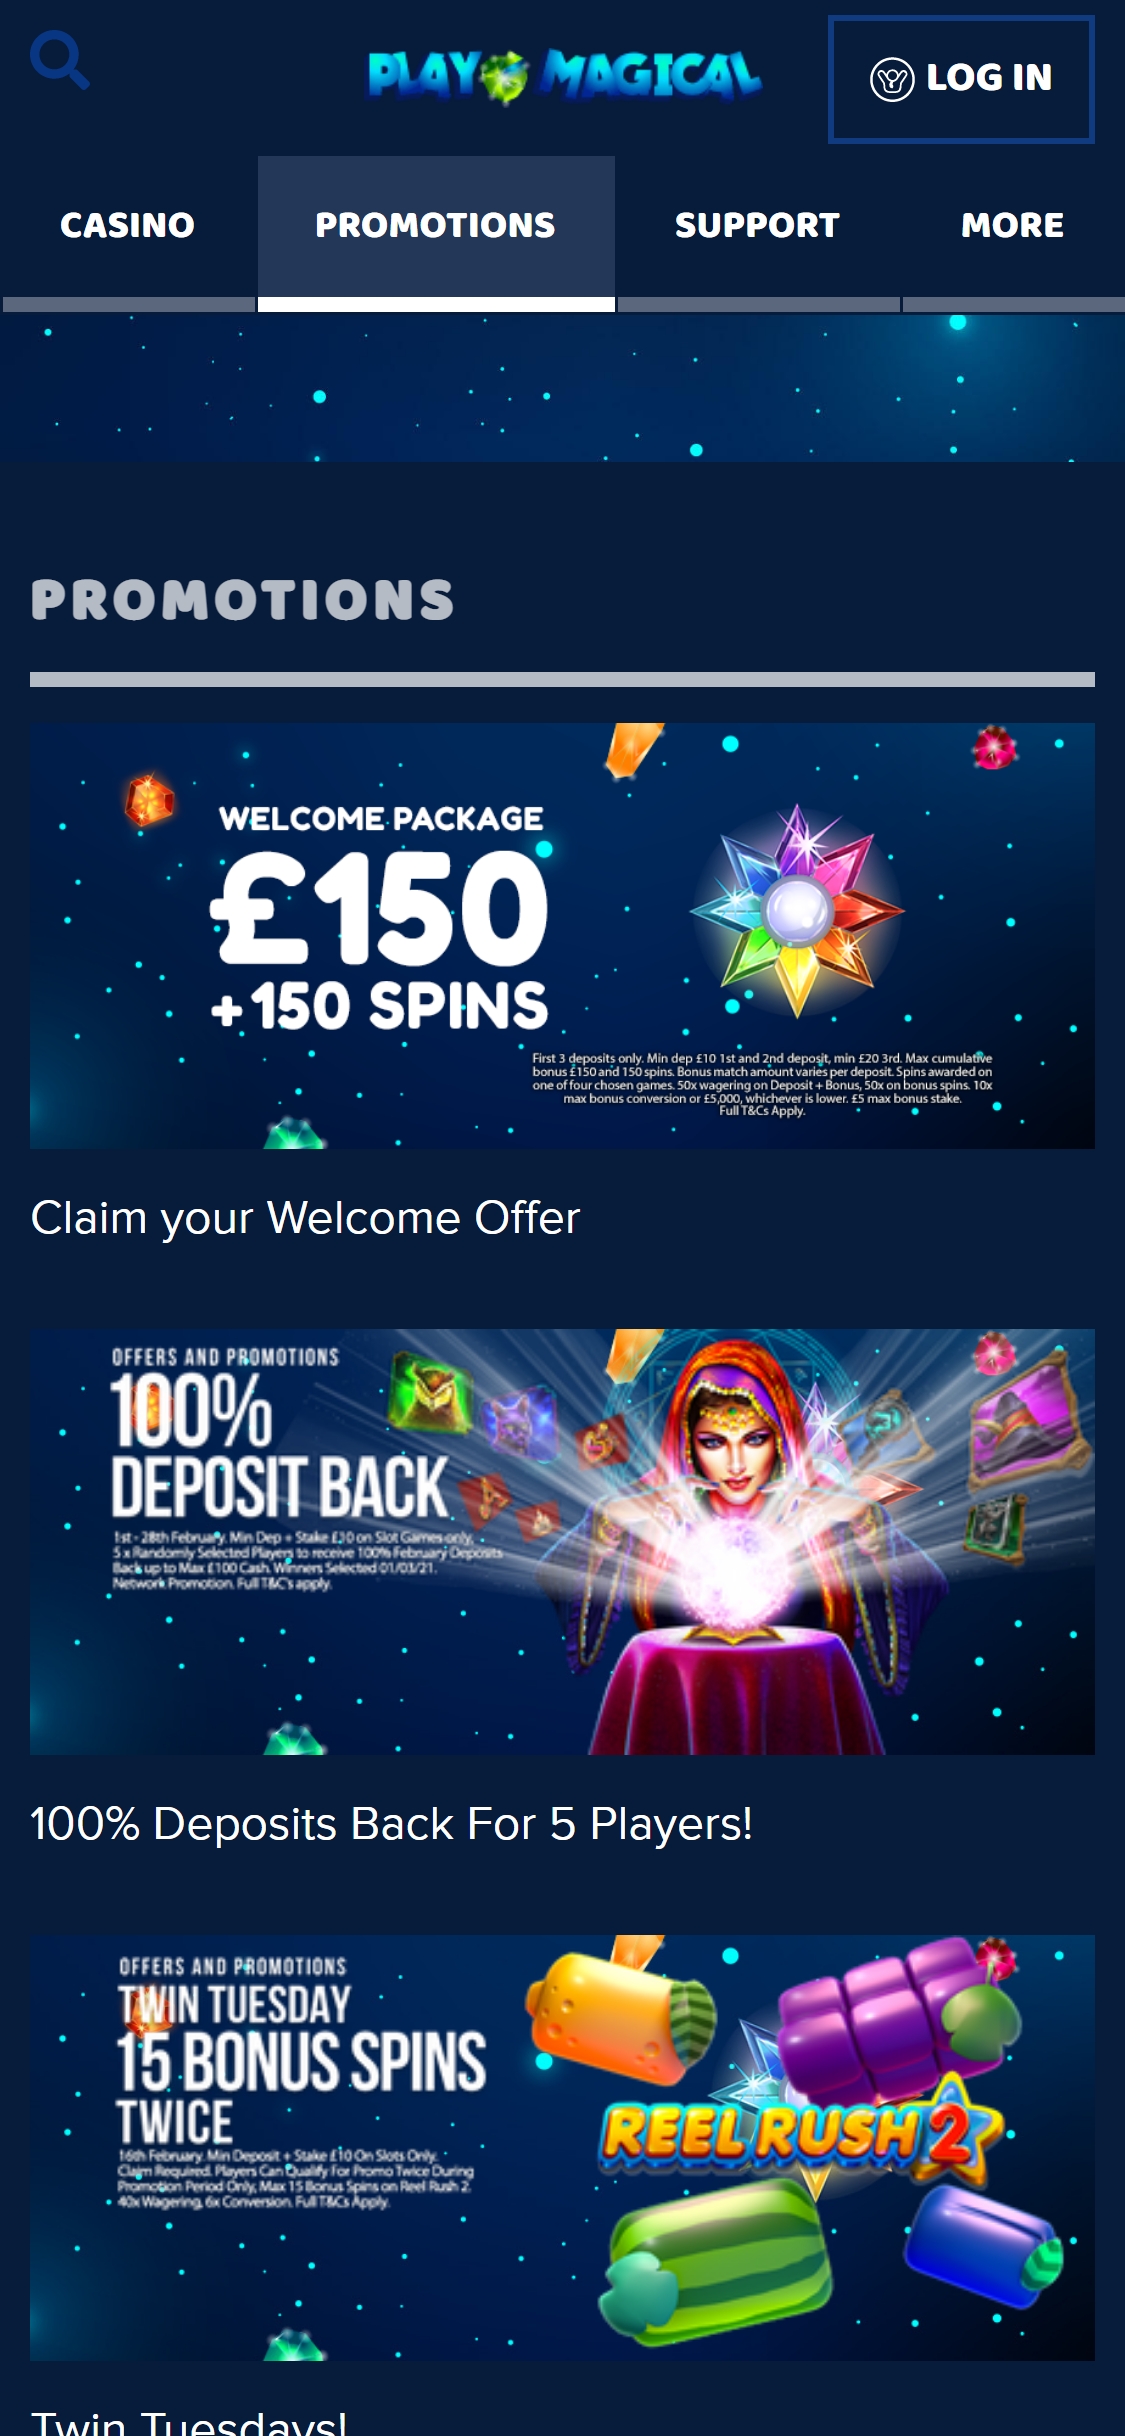 Play Magical Casino Mobile No Deposit Bonus Review